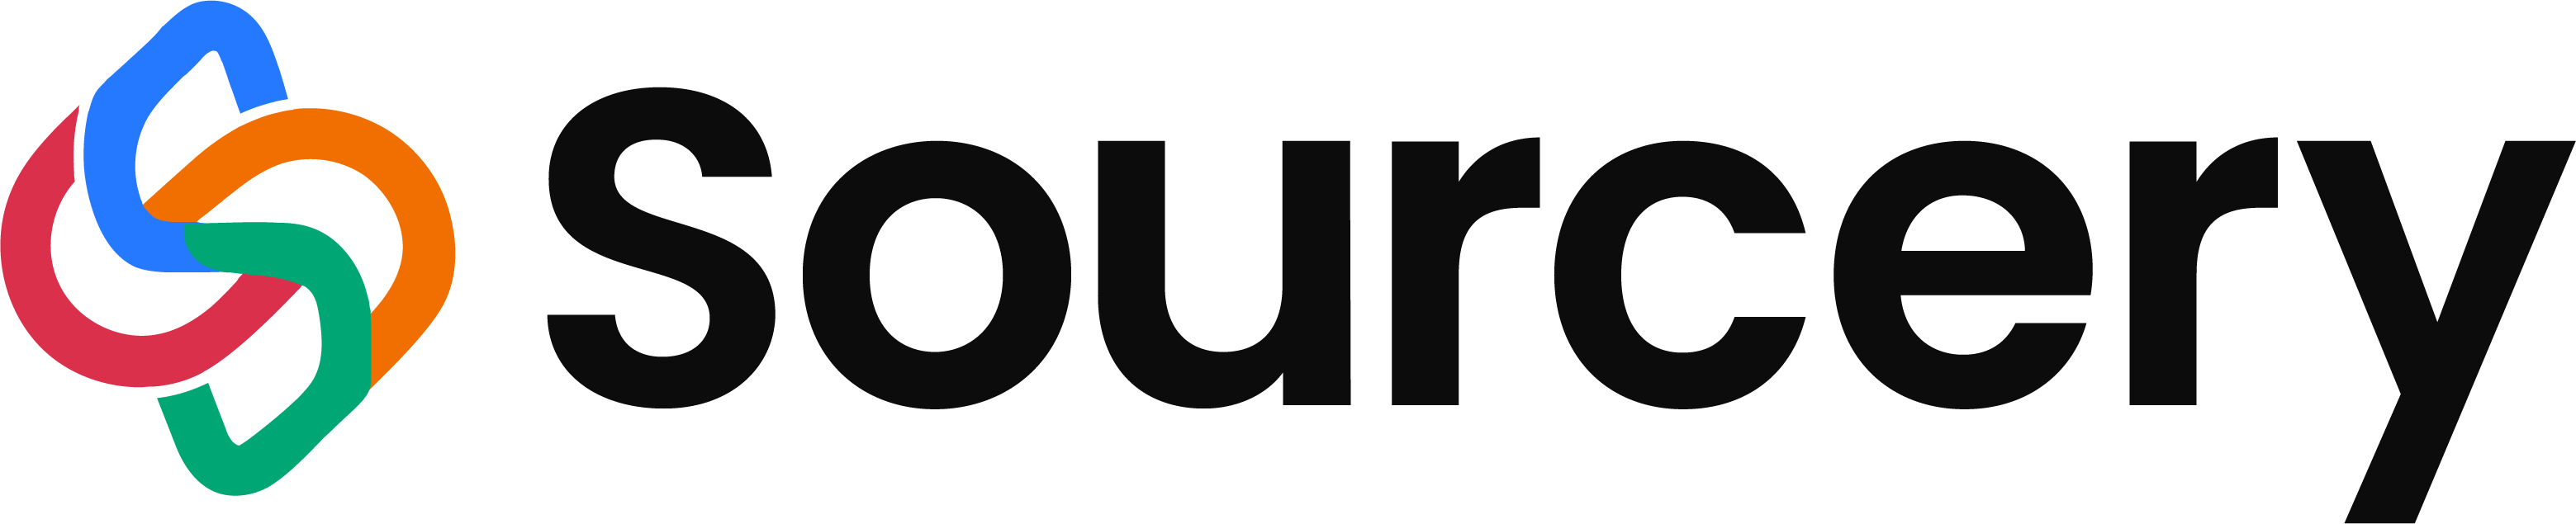 Sourcery Procurement Platform Inc. company logo